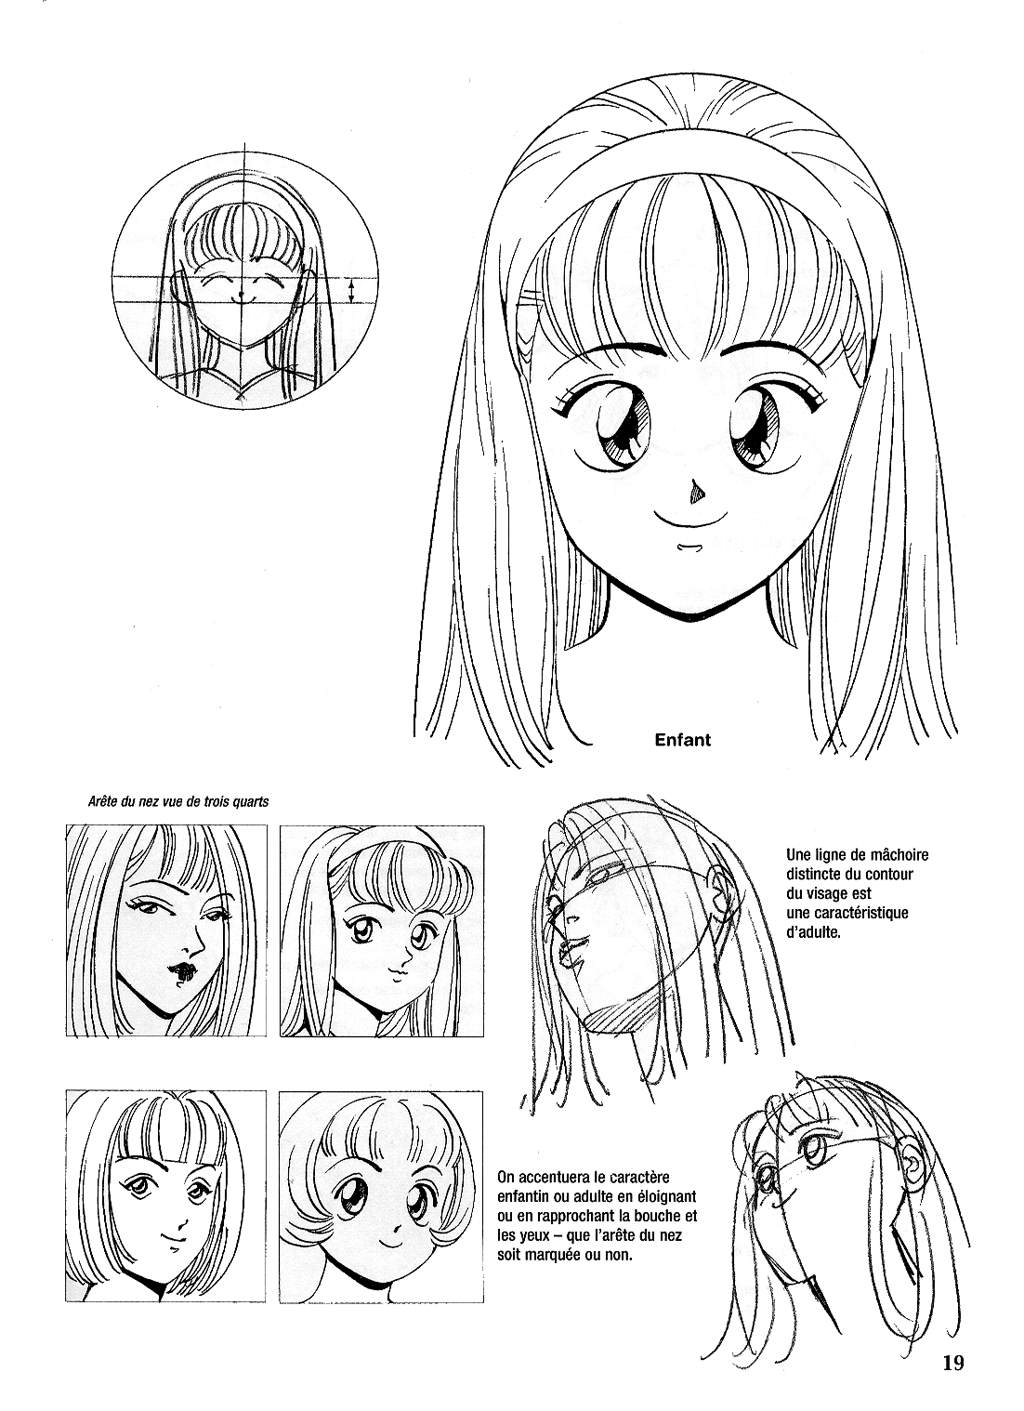 Le dessin du Manga 04 - Personnages feminin, Attitudes, Expressions numero d'image 19